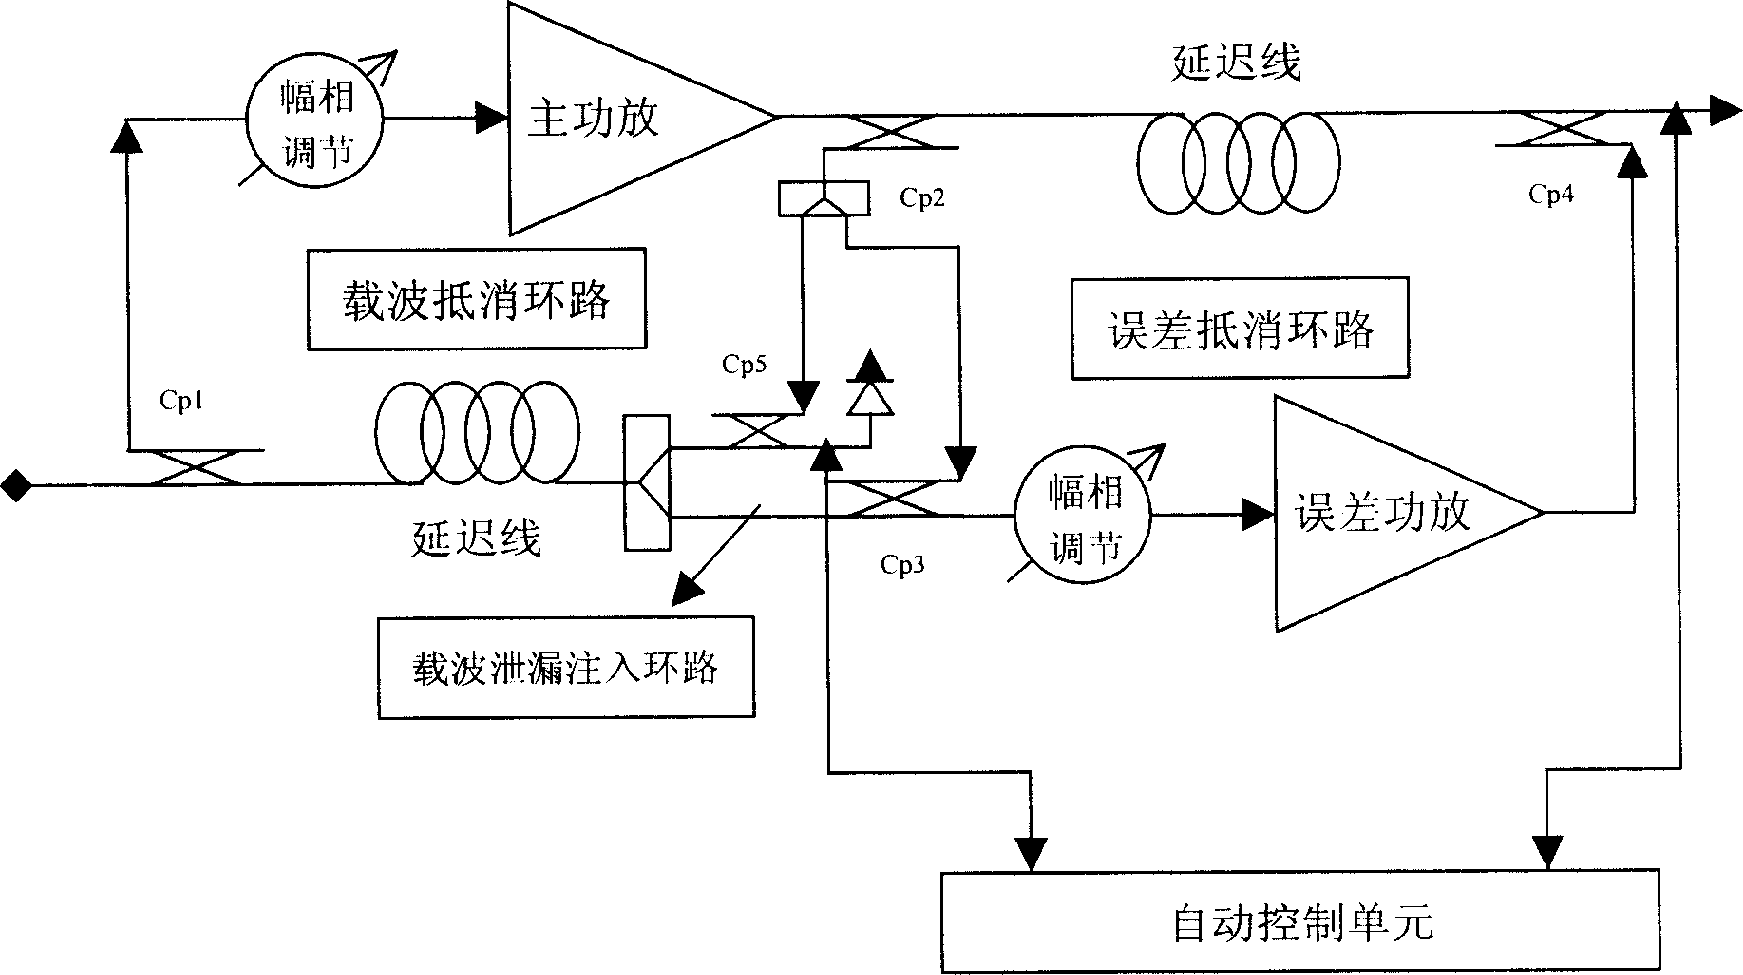 Method for increasing linearity of feedforward power amplifier using carrier leakage effect